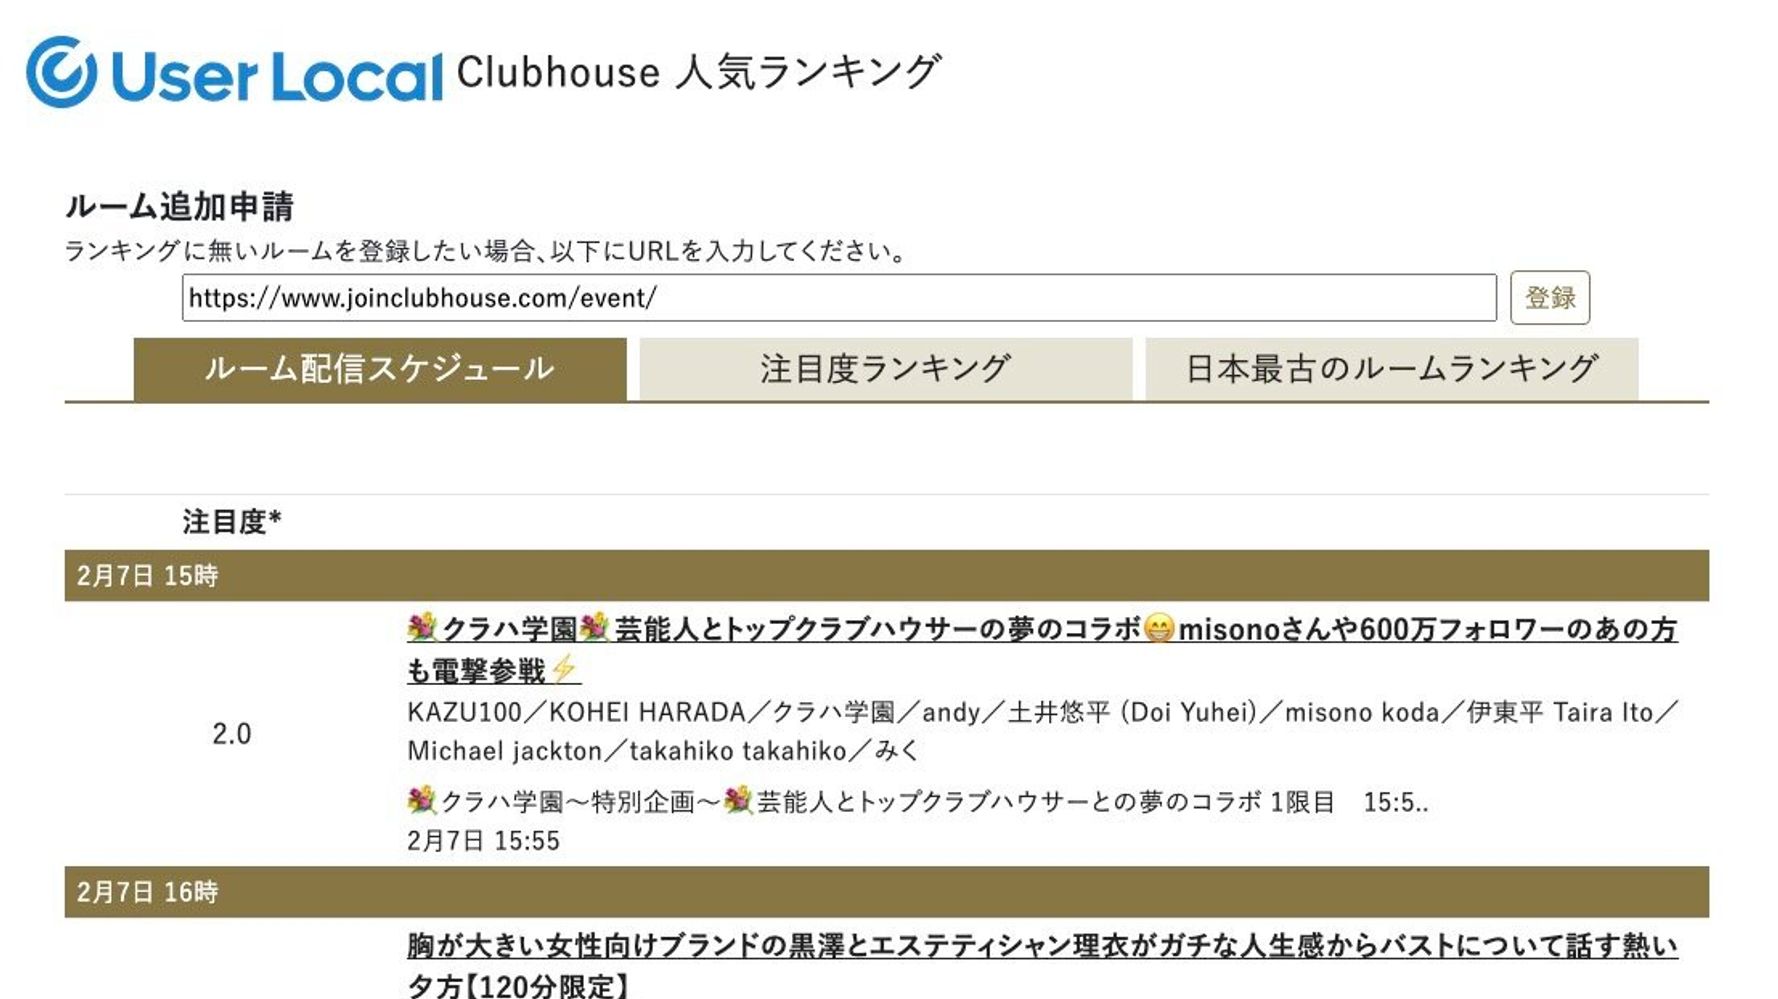 Clubhouse クラブハウス の配信スケジュールが一目で分かる ラジオ番組表のようなサイトが誕生 ハフポスト